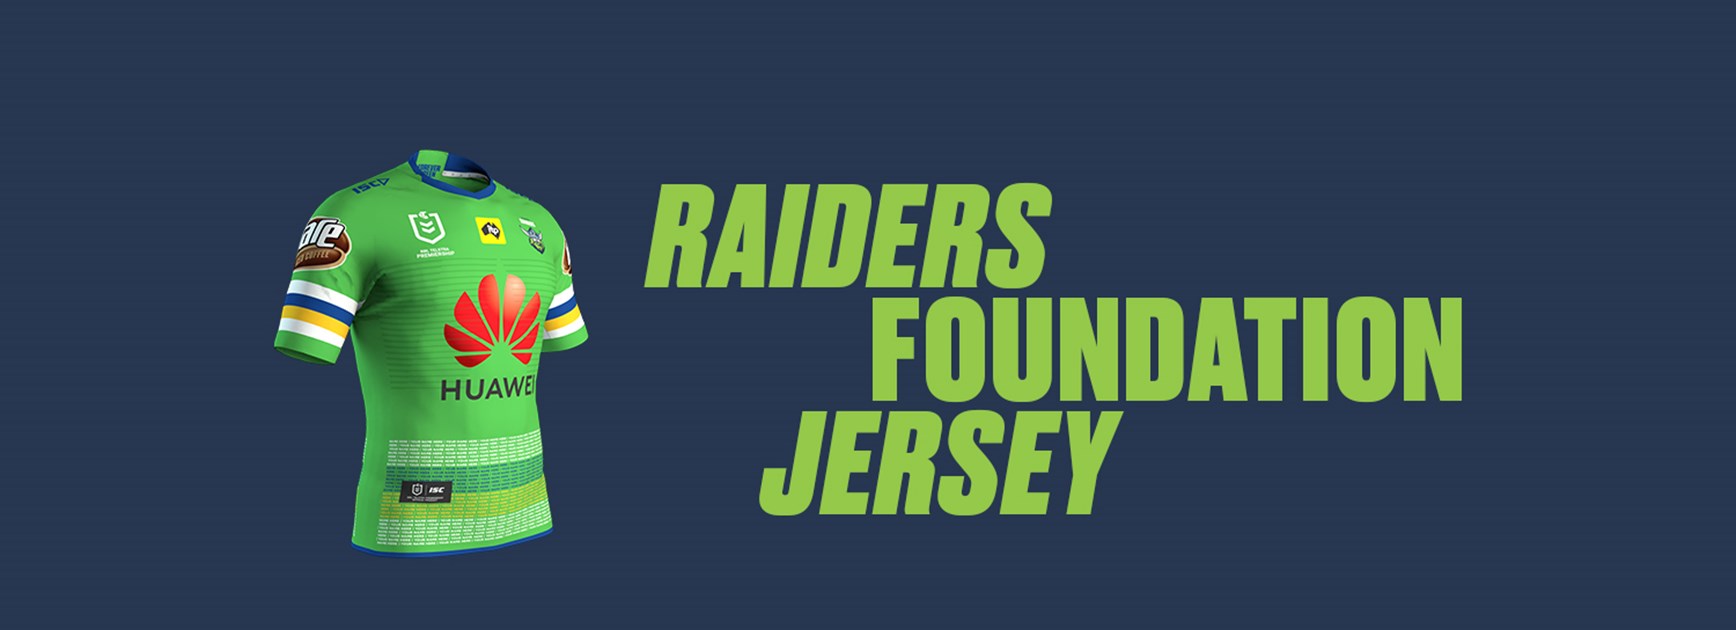 Raiders launch Foundation Jersey